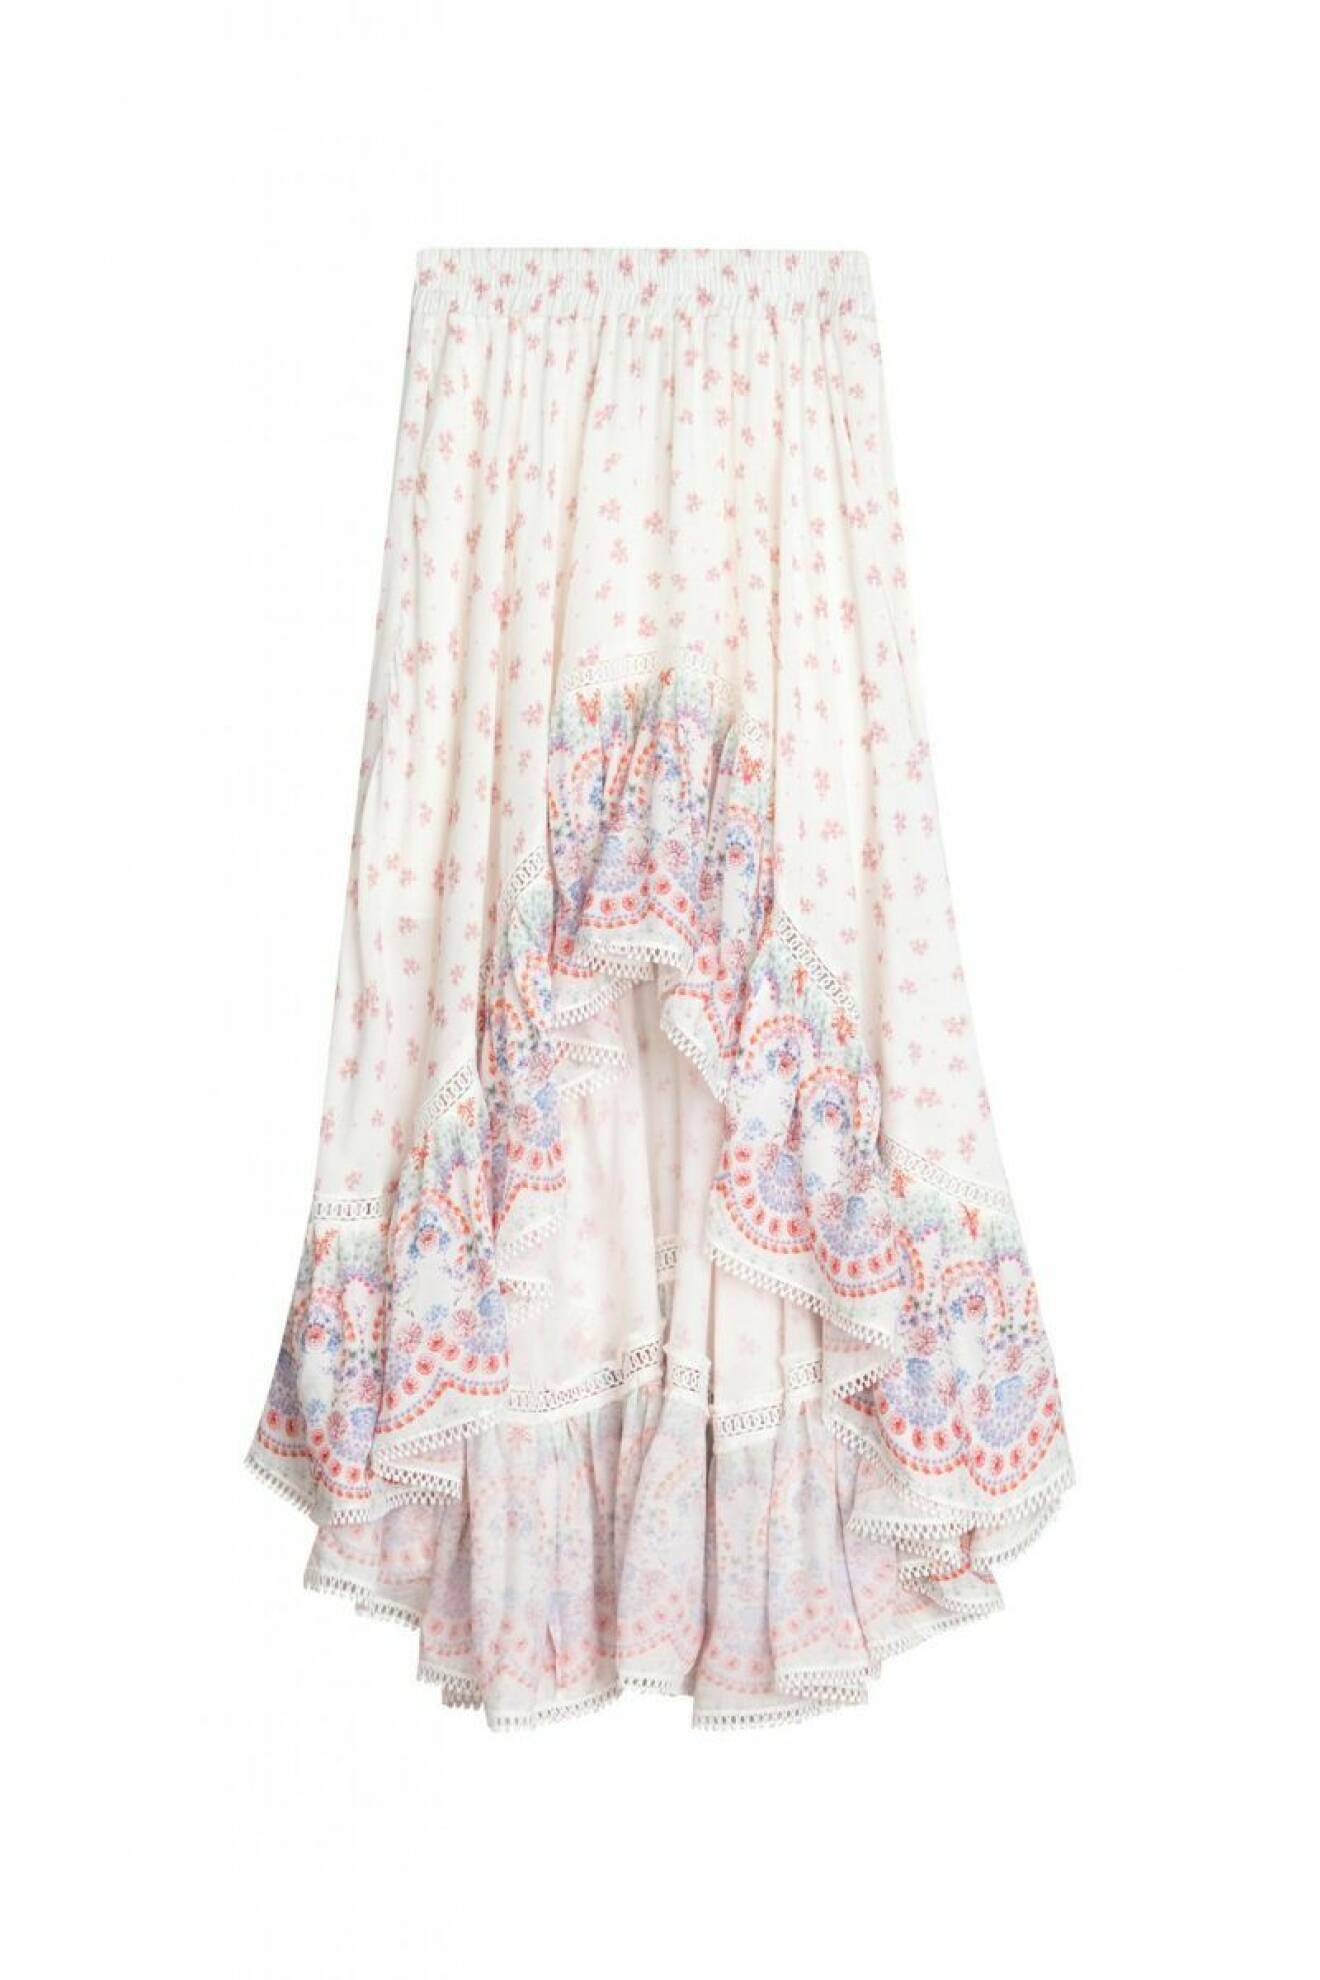 By Malinas resortkollektion 2020: Blommig kjol